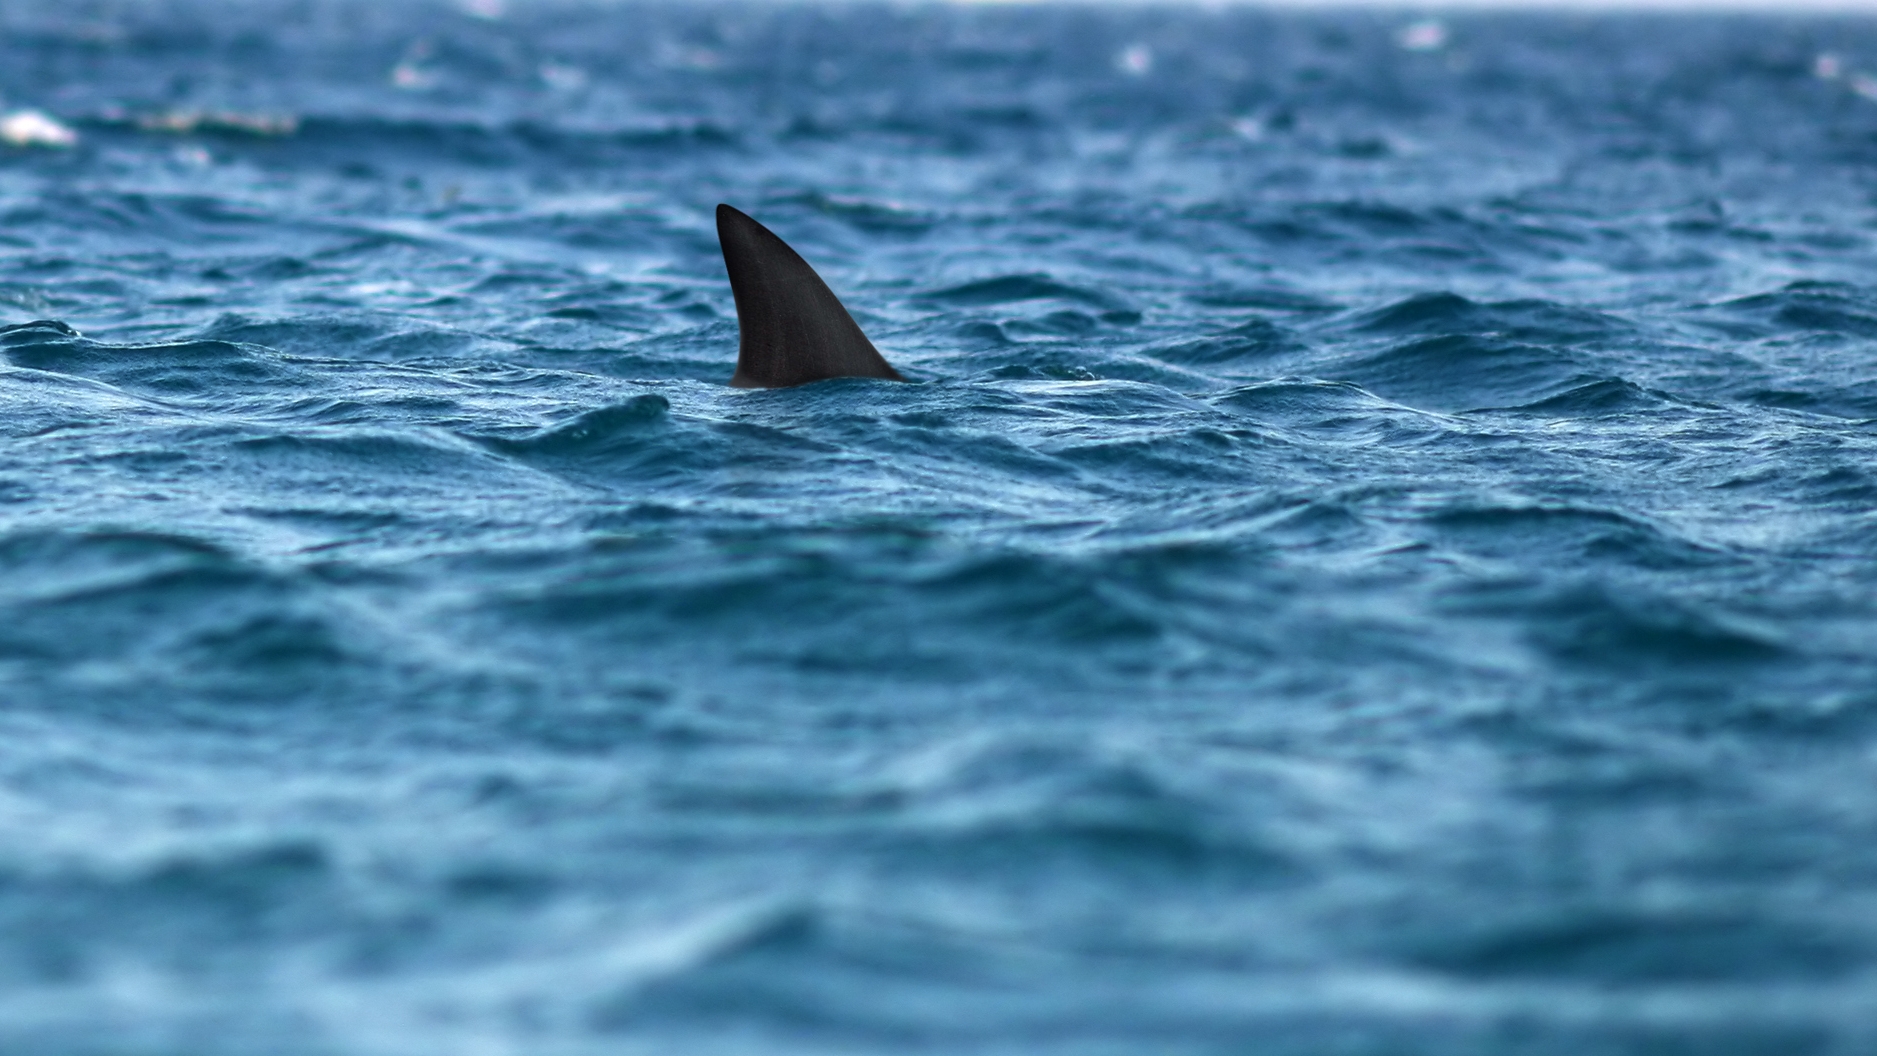 Great white sharks off Nantucket in the scientific spotlight, News & Press